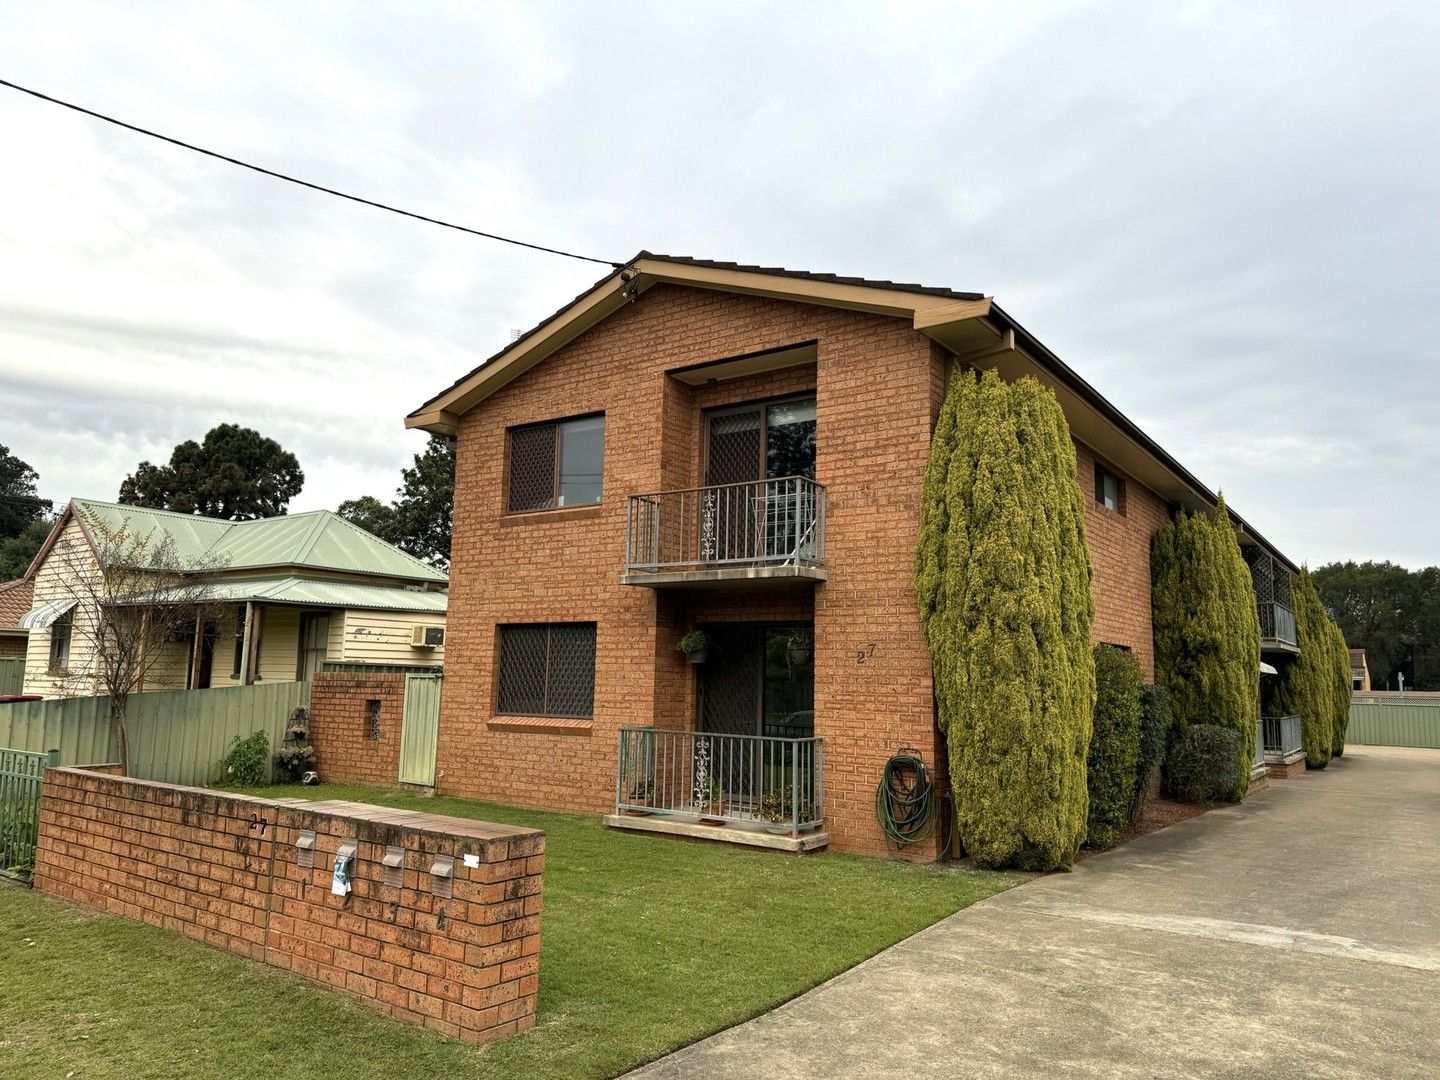 2 bedrooms House in 3/27 Doyle Street SINGLETON NSW, 2330